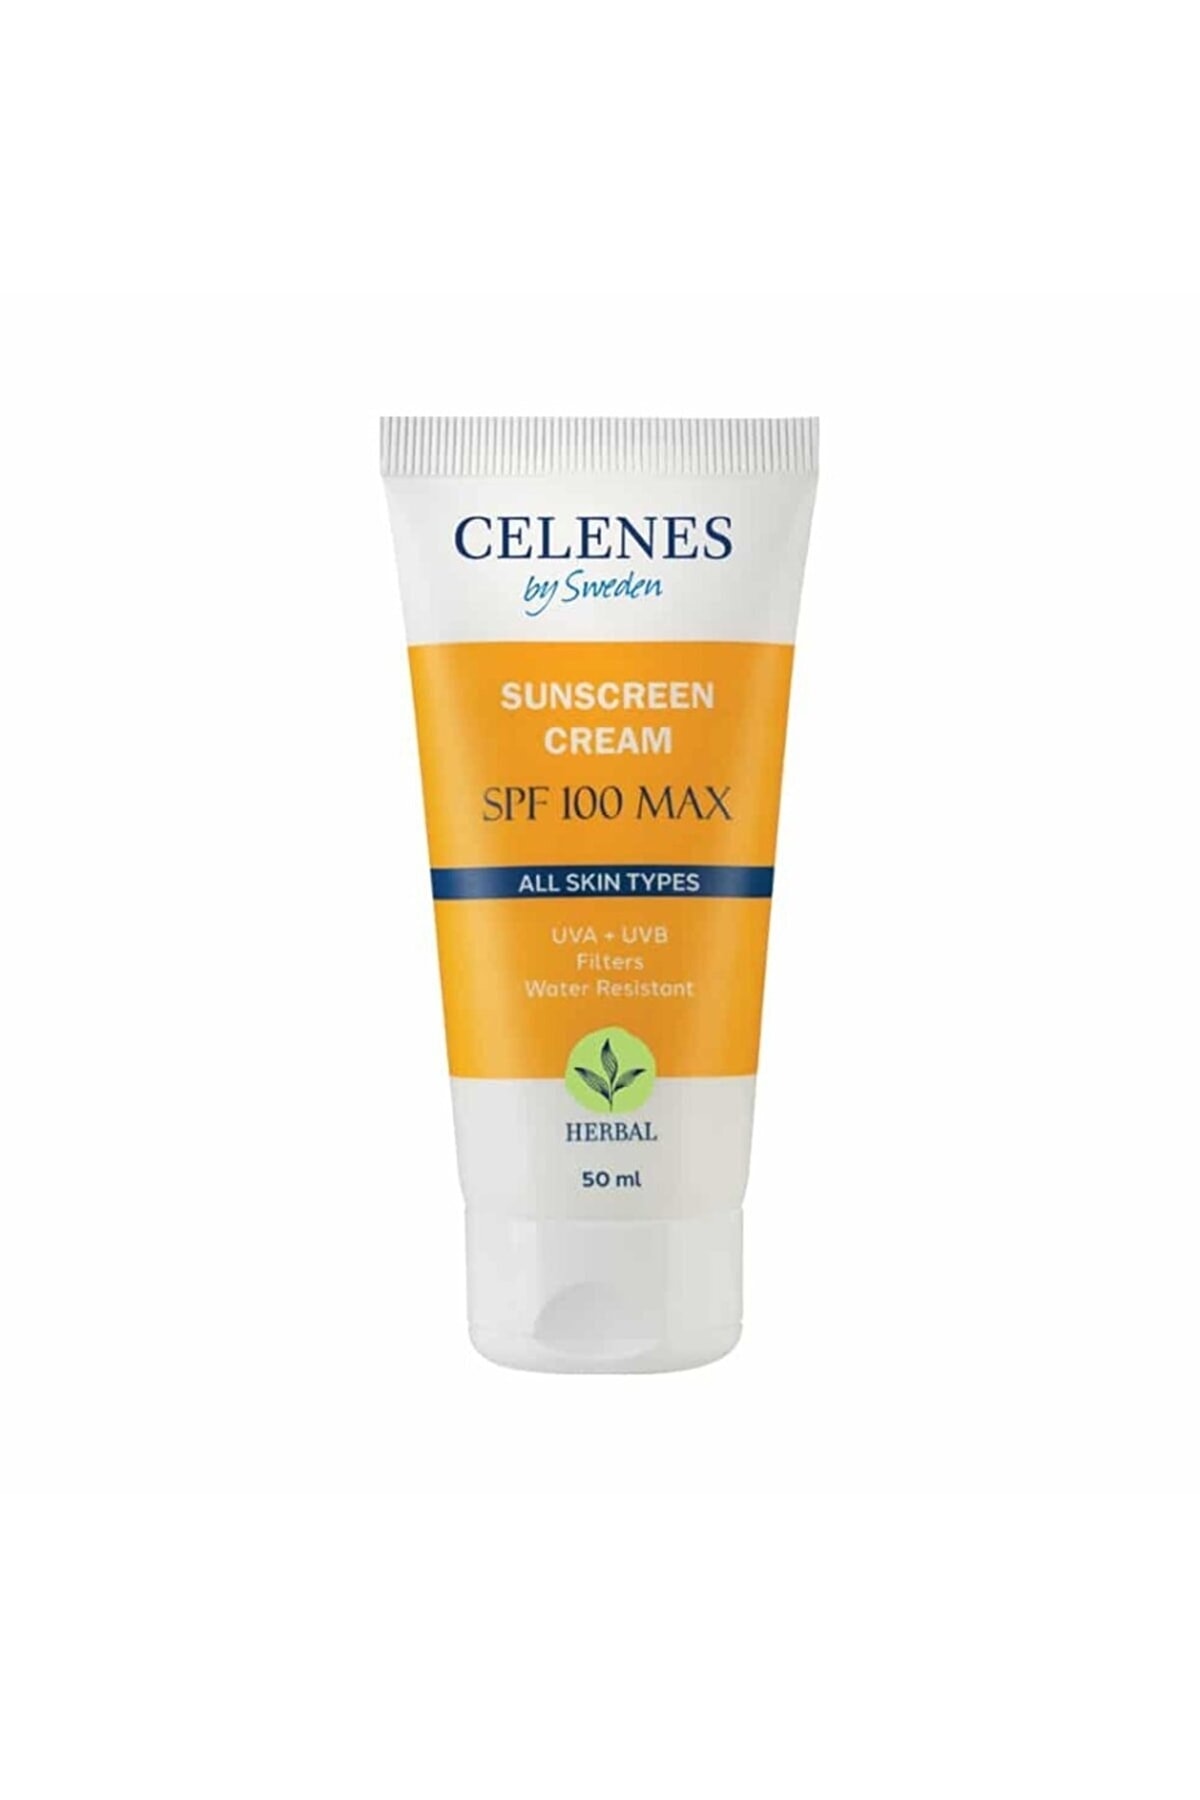 Celenes Lawes Sunscreen Cream Uva+uvb Filter For Paraben Free 50ml.